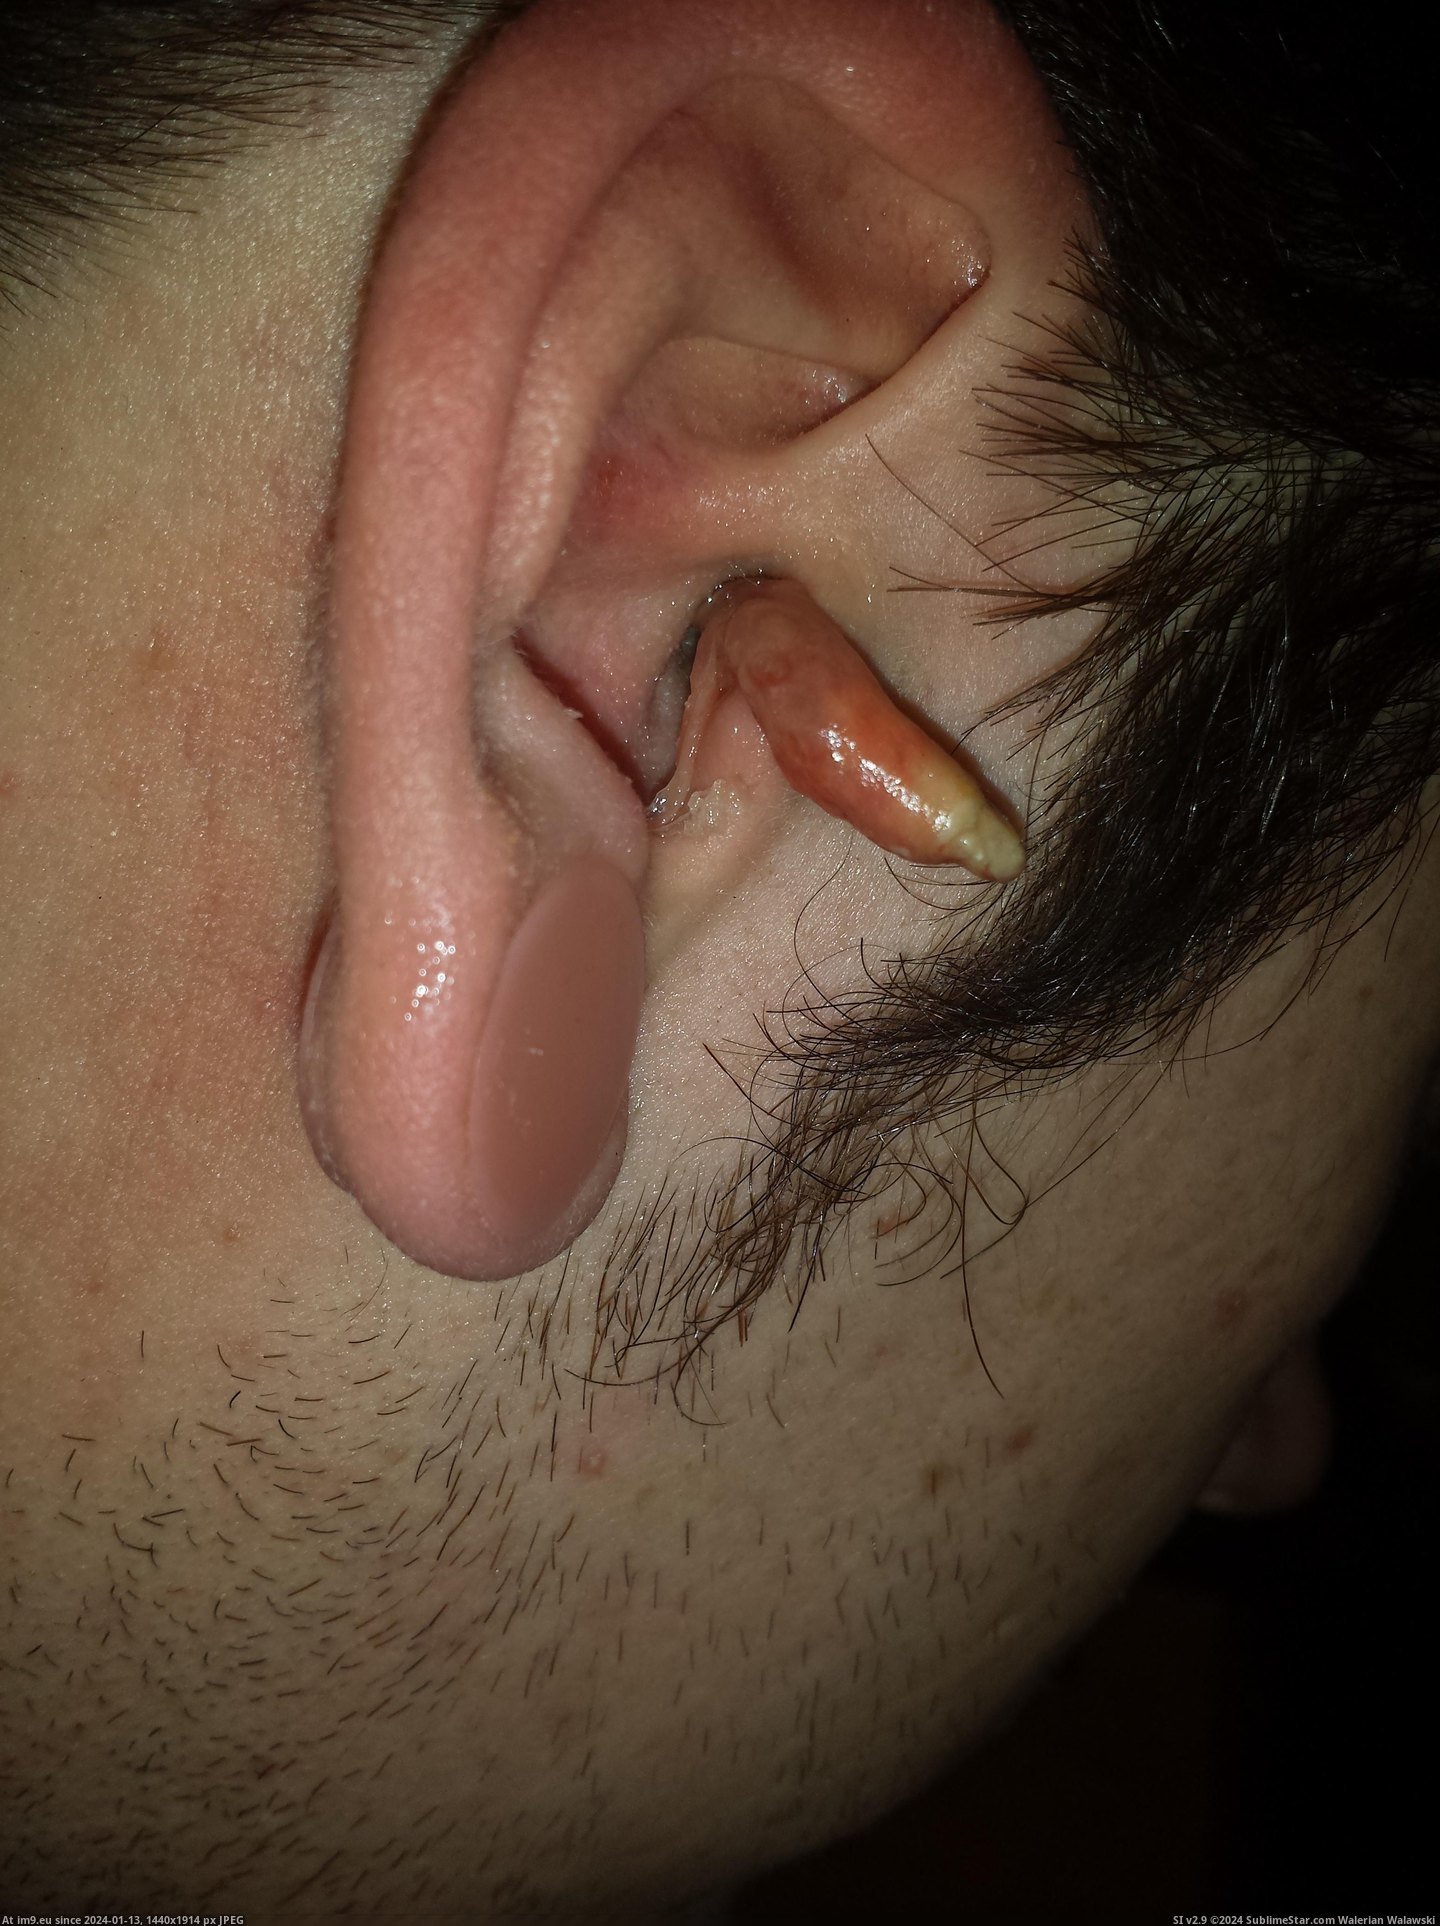 #Wtf #Ear #Infection #Crazy [Wtf] My crazy ear infection 3 Pic. (Obraz z album My r/WTF favs))